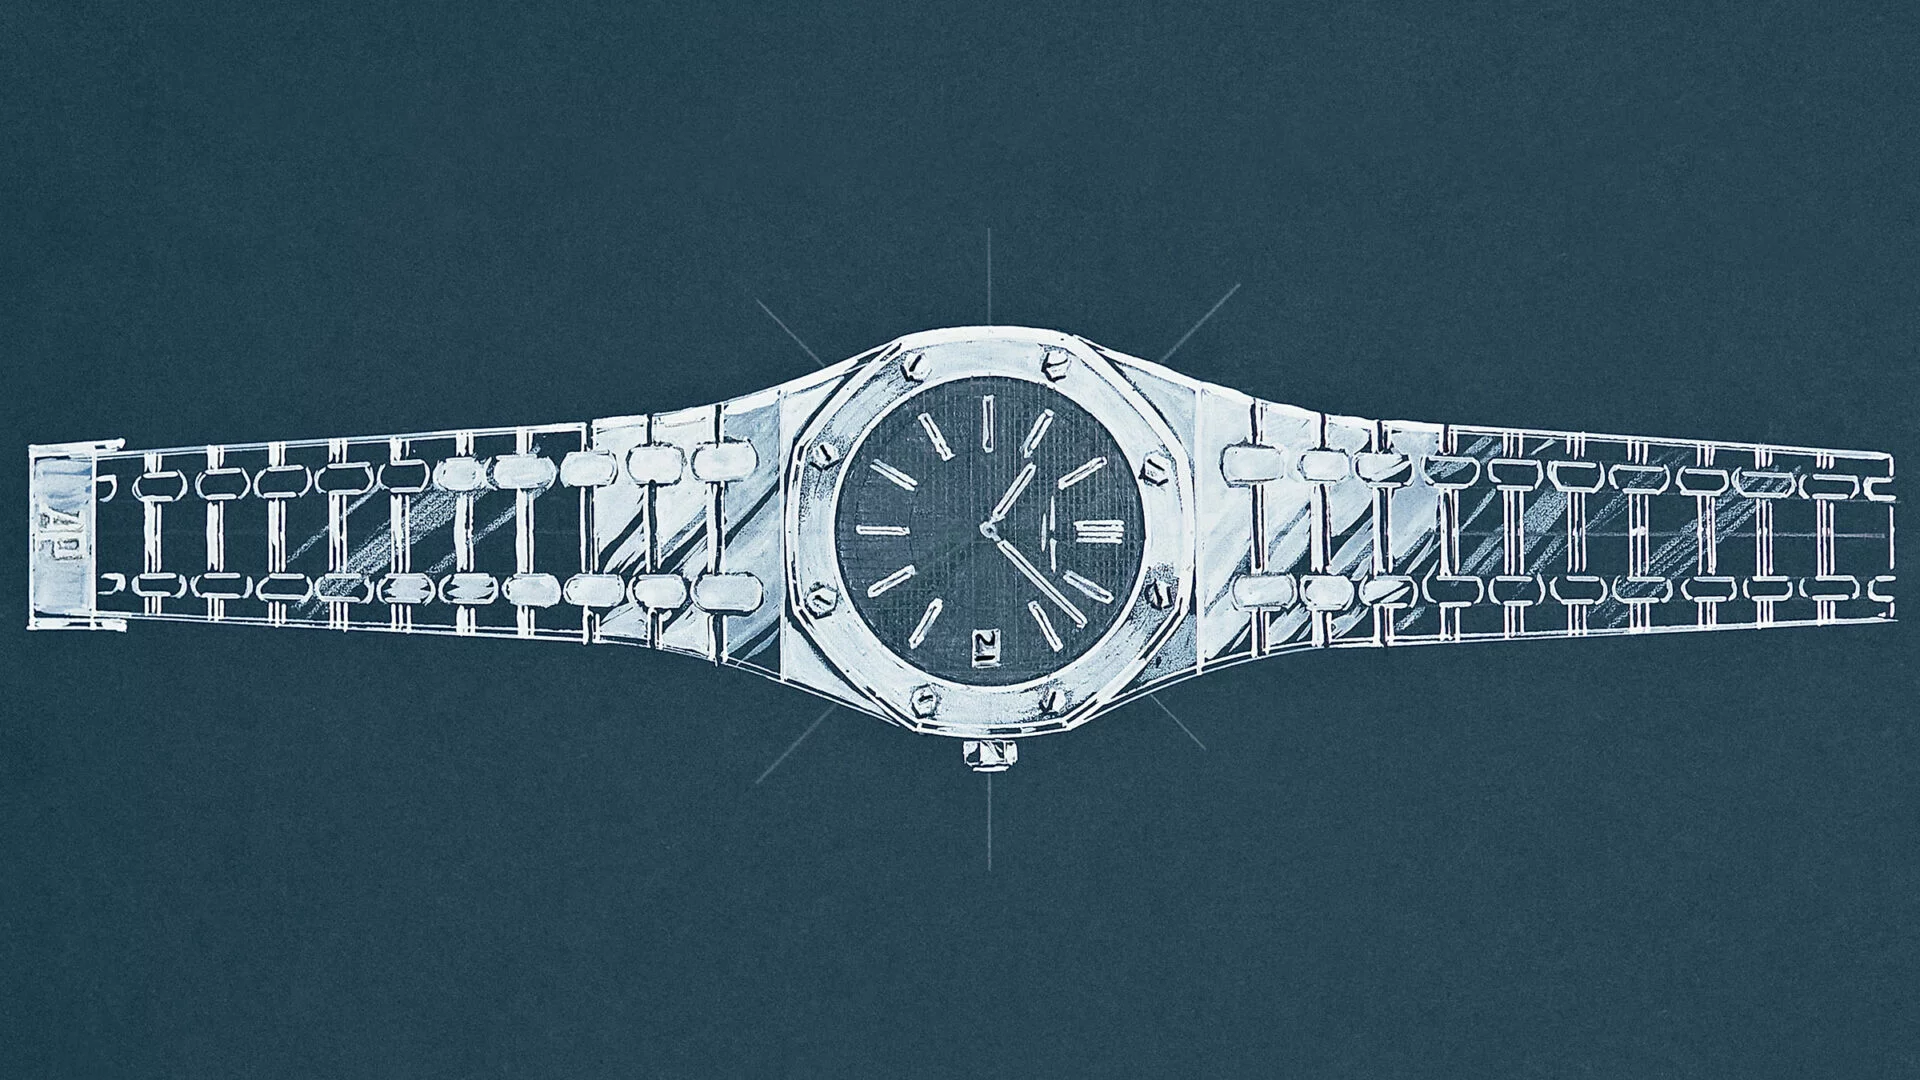 Audemars Piguet's Royal Oak: Iconic luxury watches - Luxury Watches, Buy  Genuine Brands Rolex Omega IWC